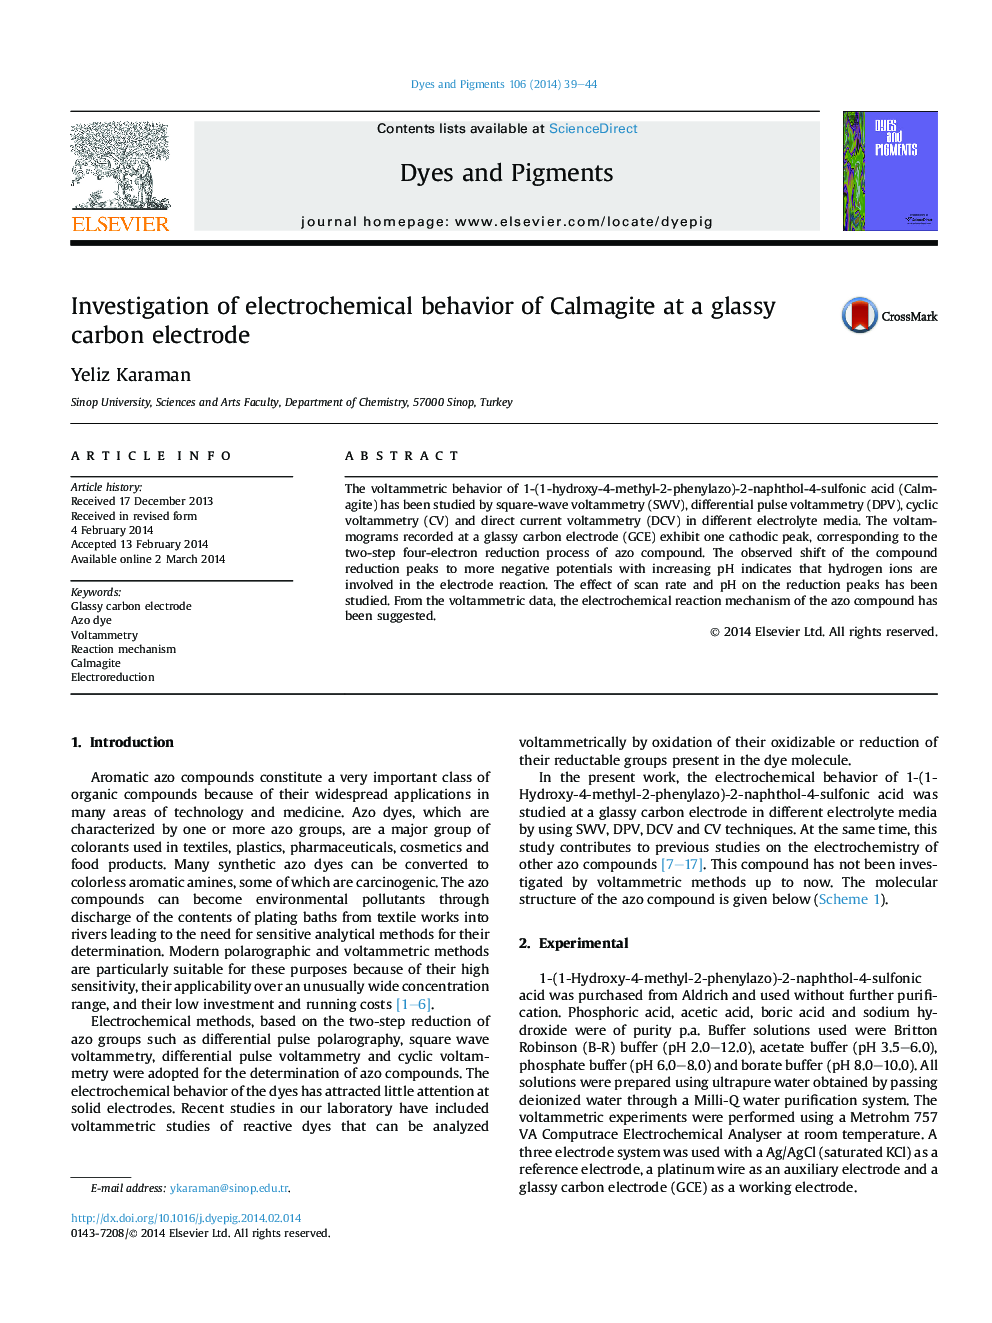 Investigation of electrochemical behavior of Calmagite at a glassy carbon electrode